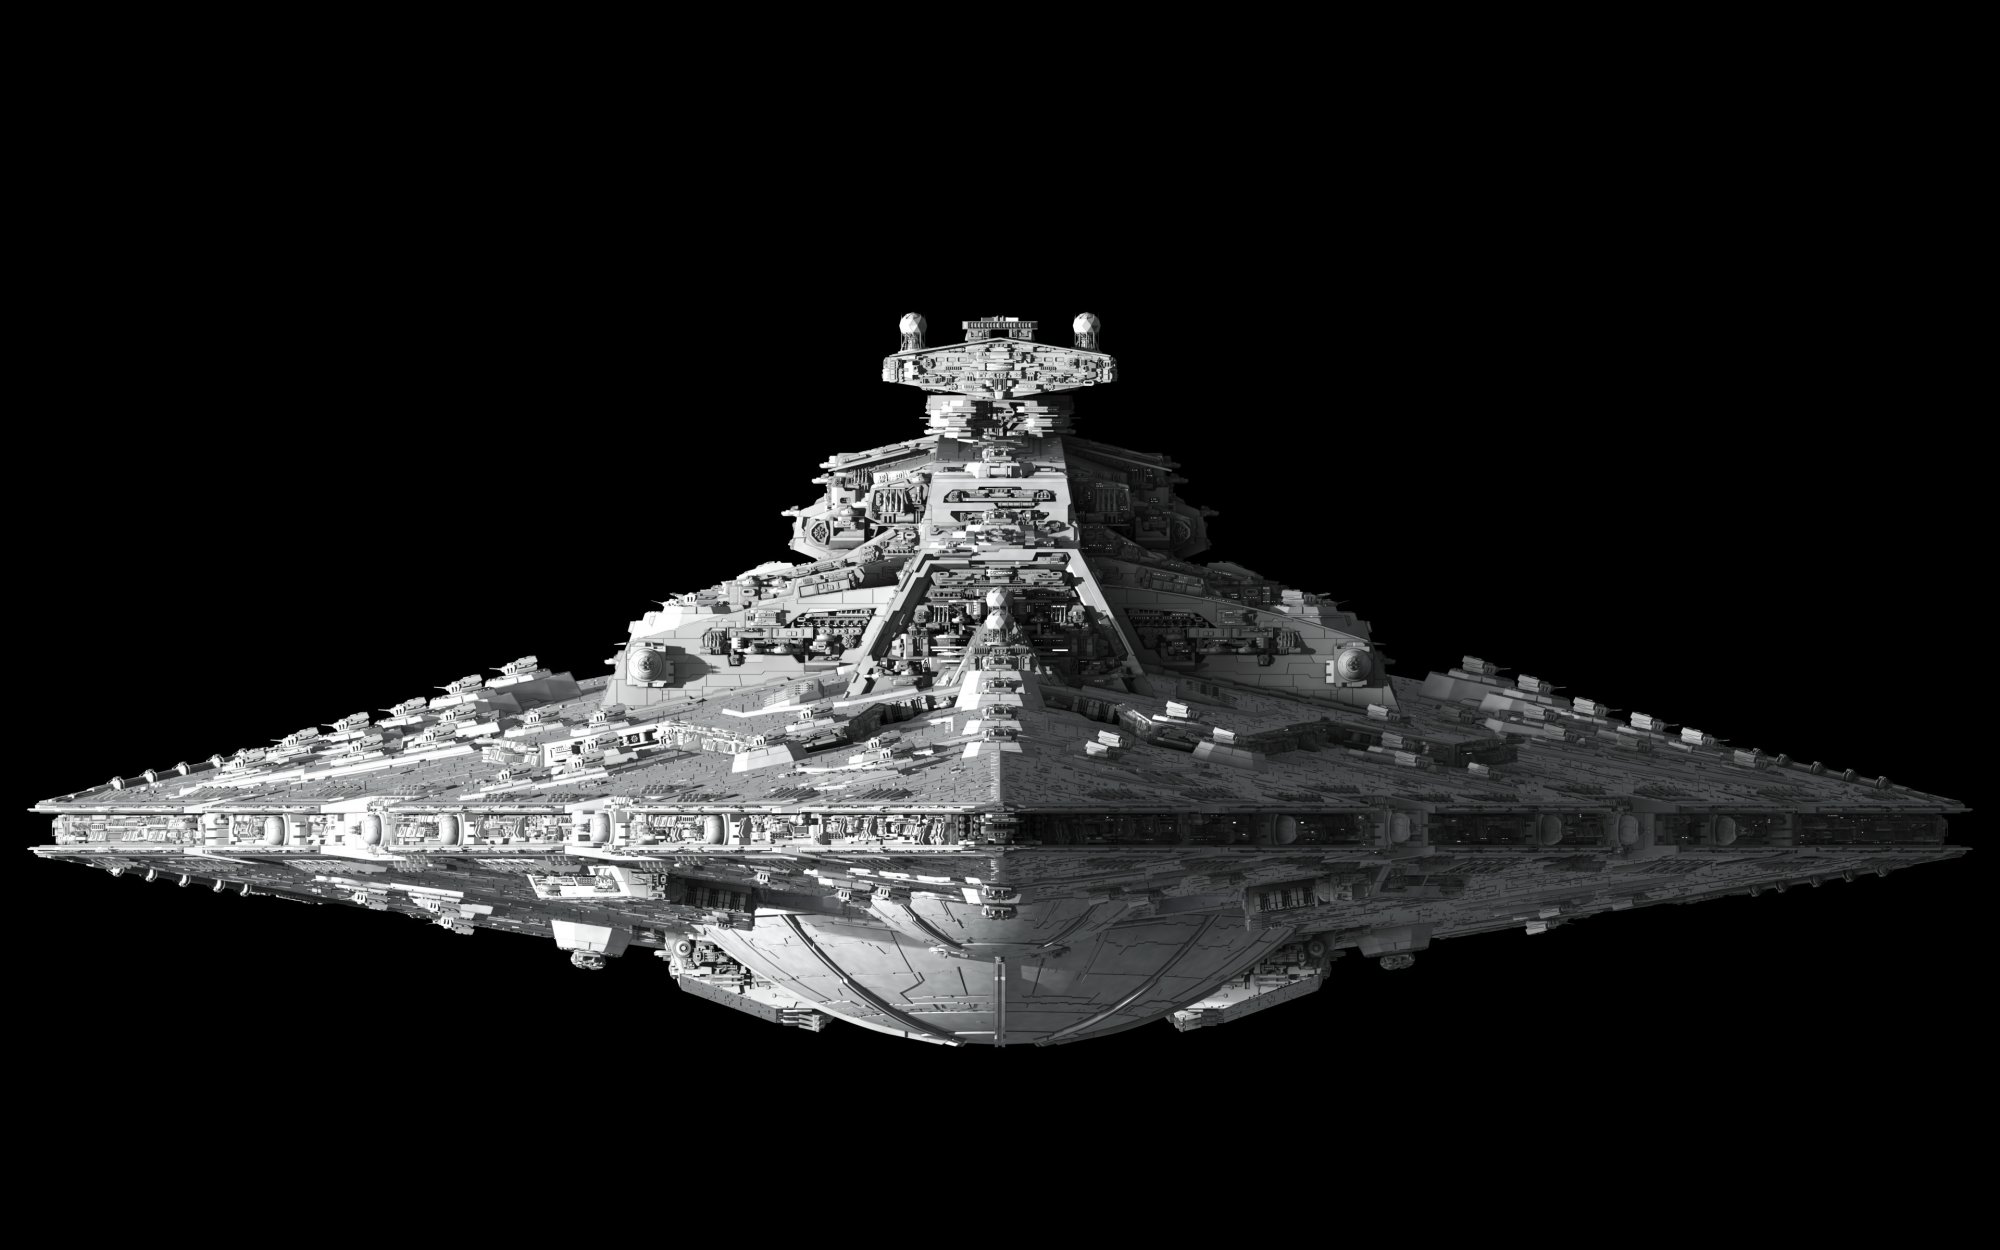 Imperial Star Destroyer.jpg